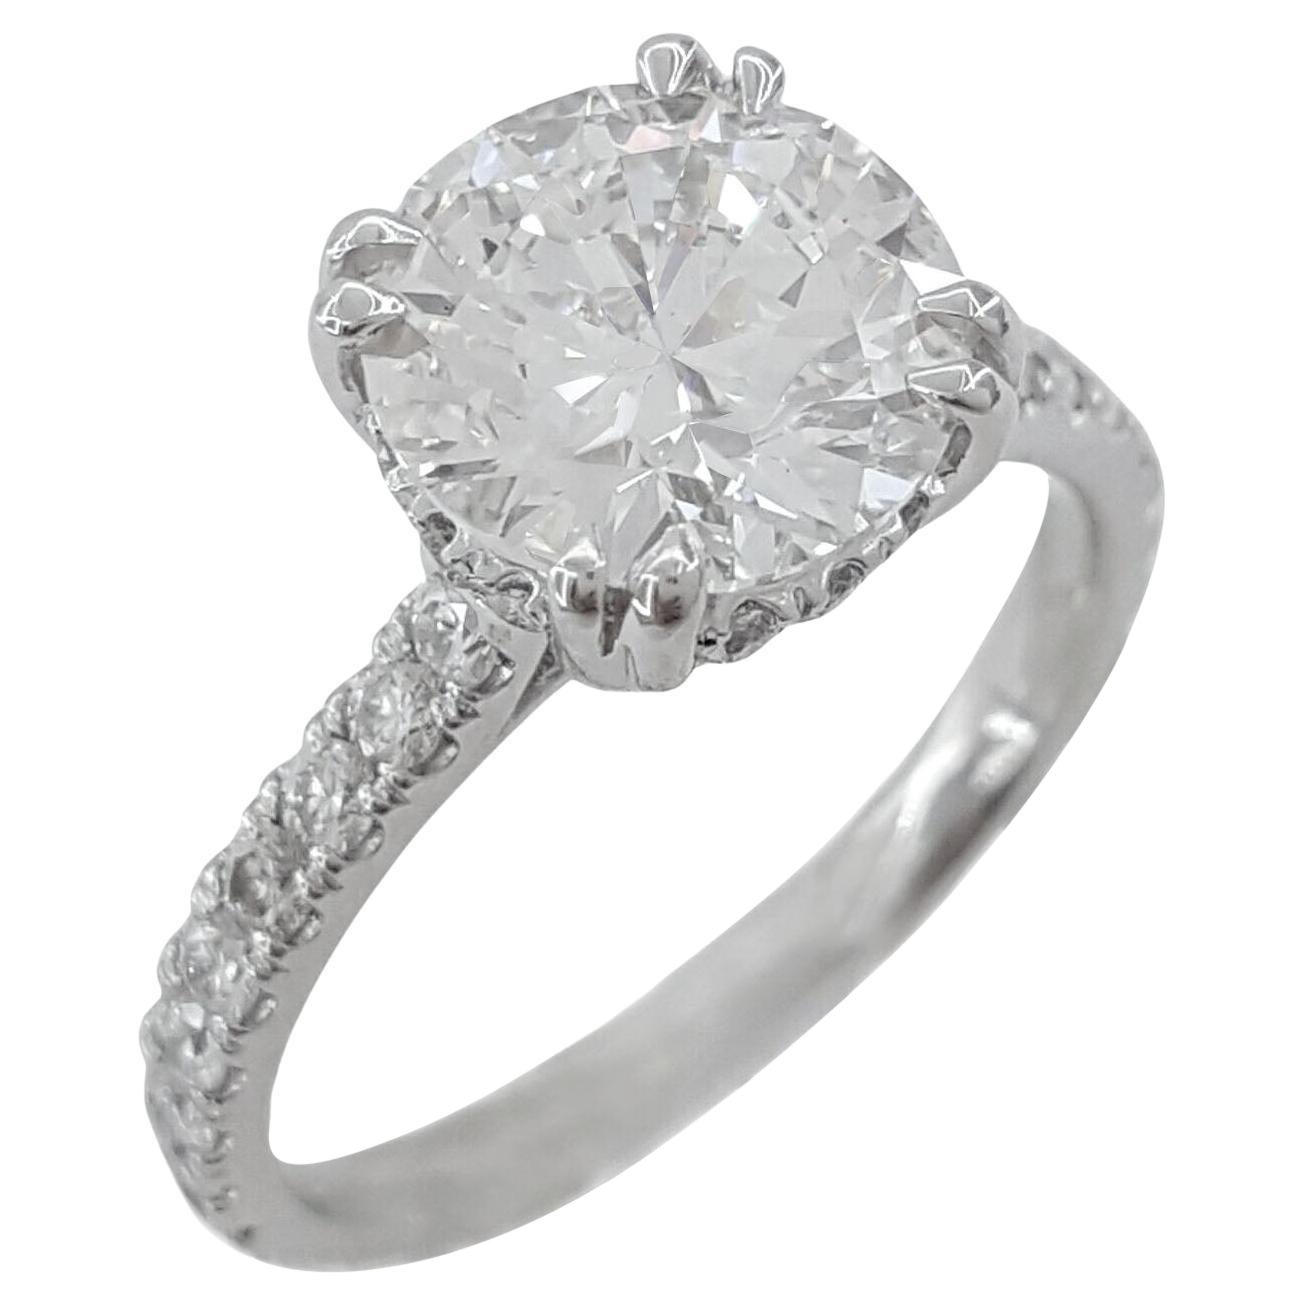 GIA Certified 3 Carat Round Brlliant Cut Diamond Ring E Color VS2 Clarity